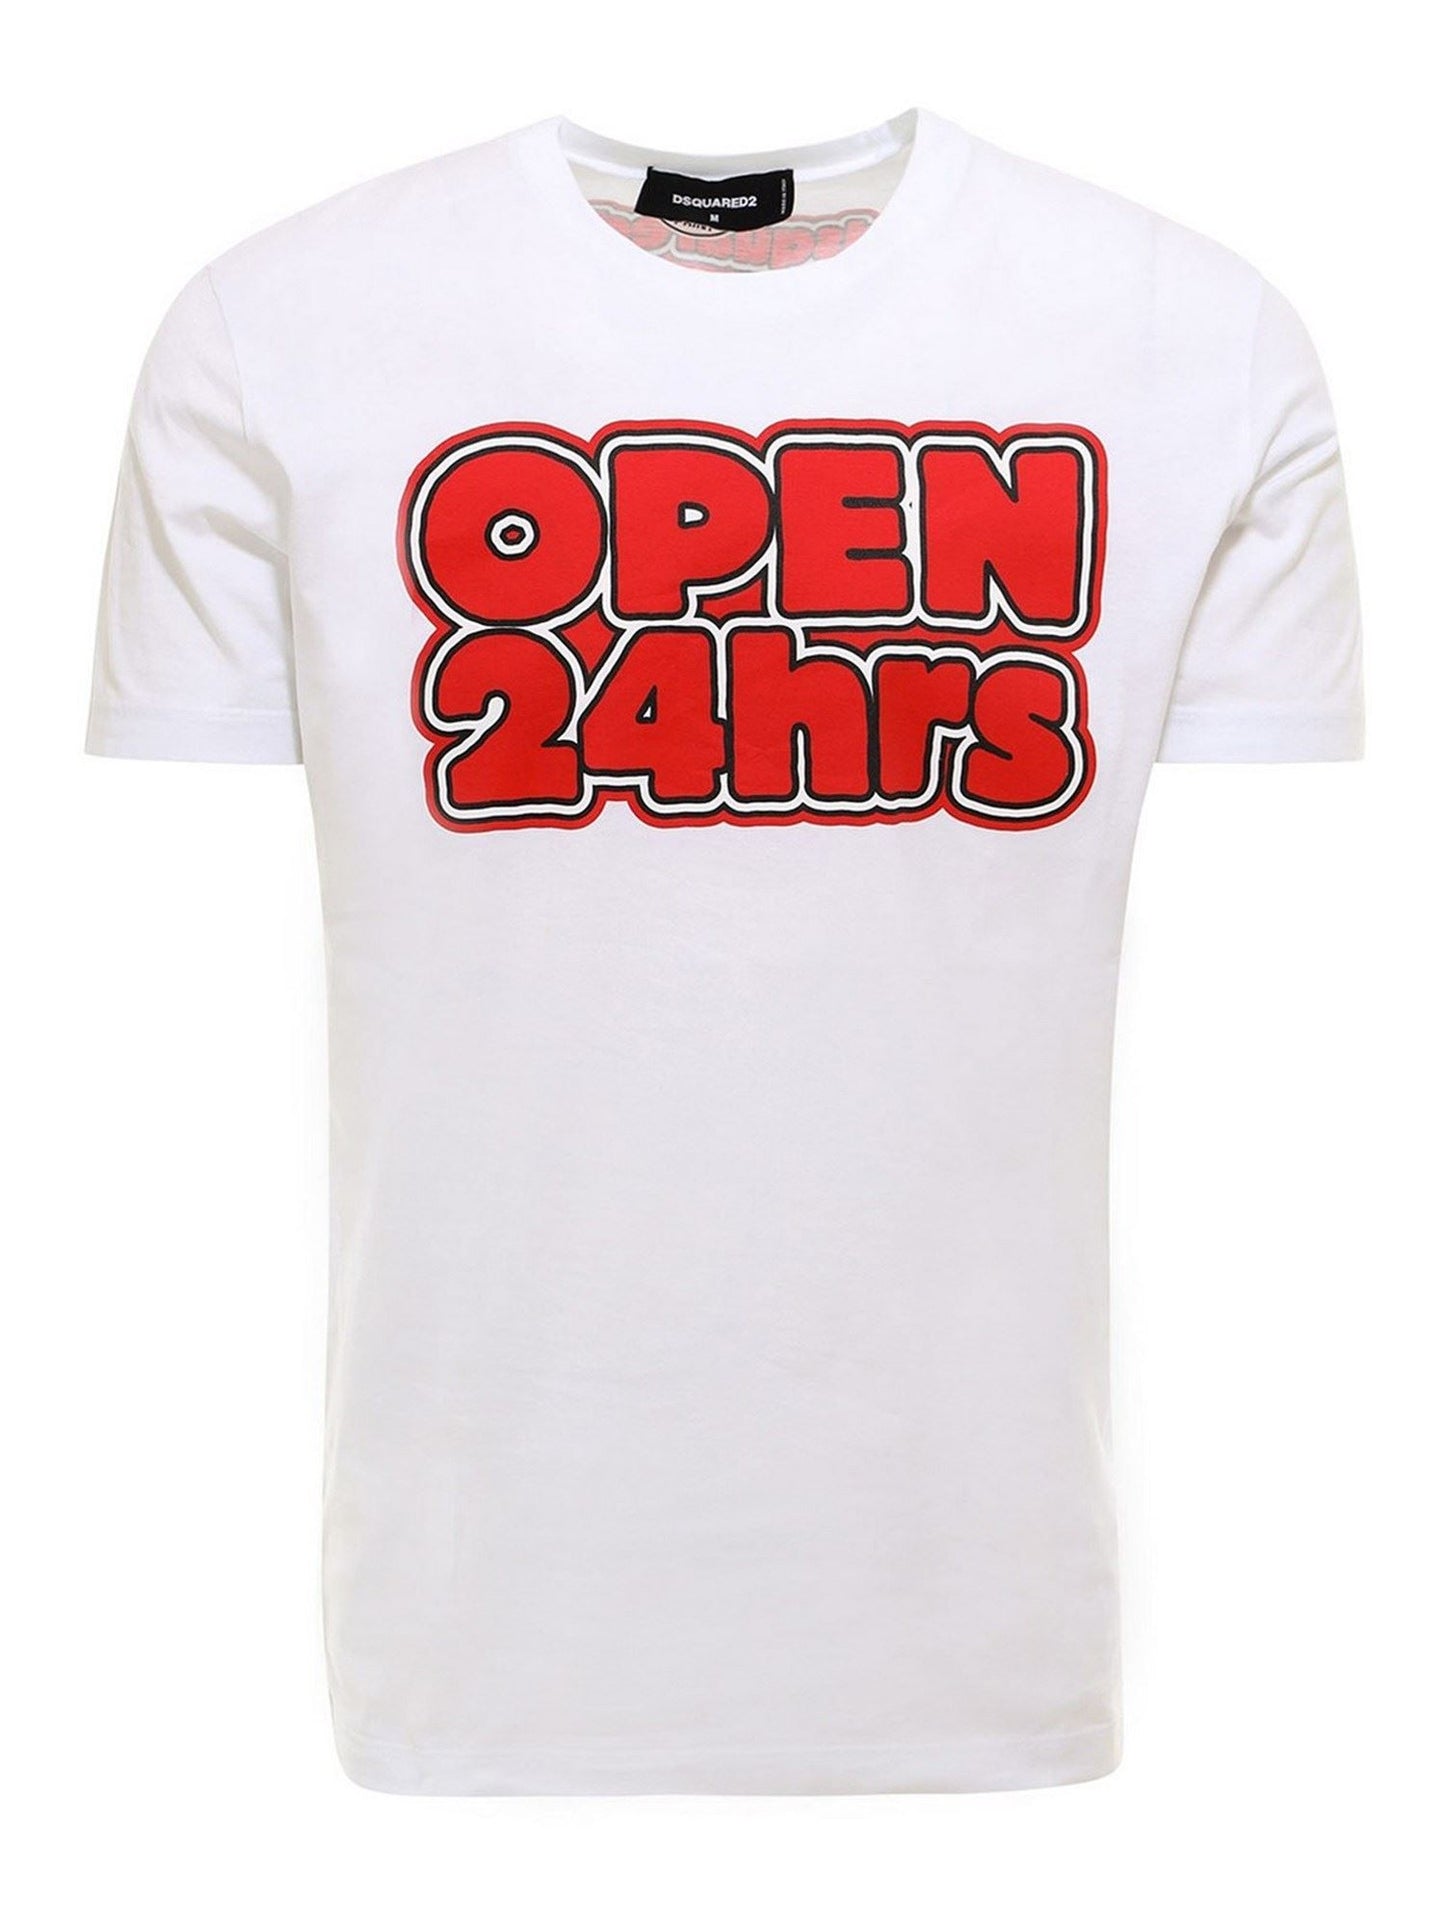 White Dsquared² Men's Open 24hrs T-shirt